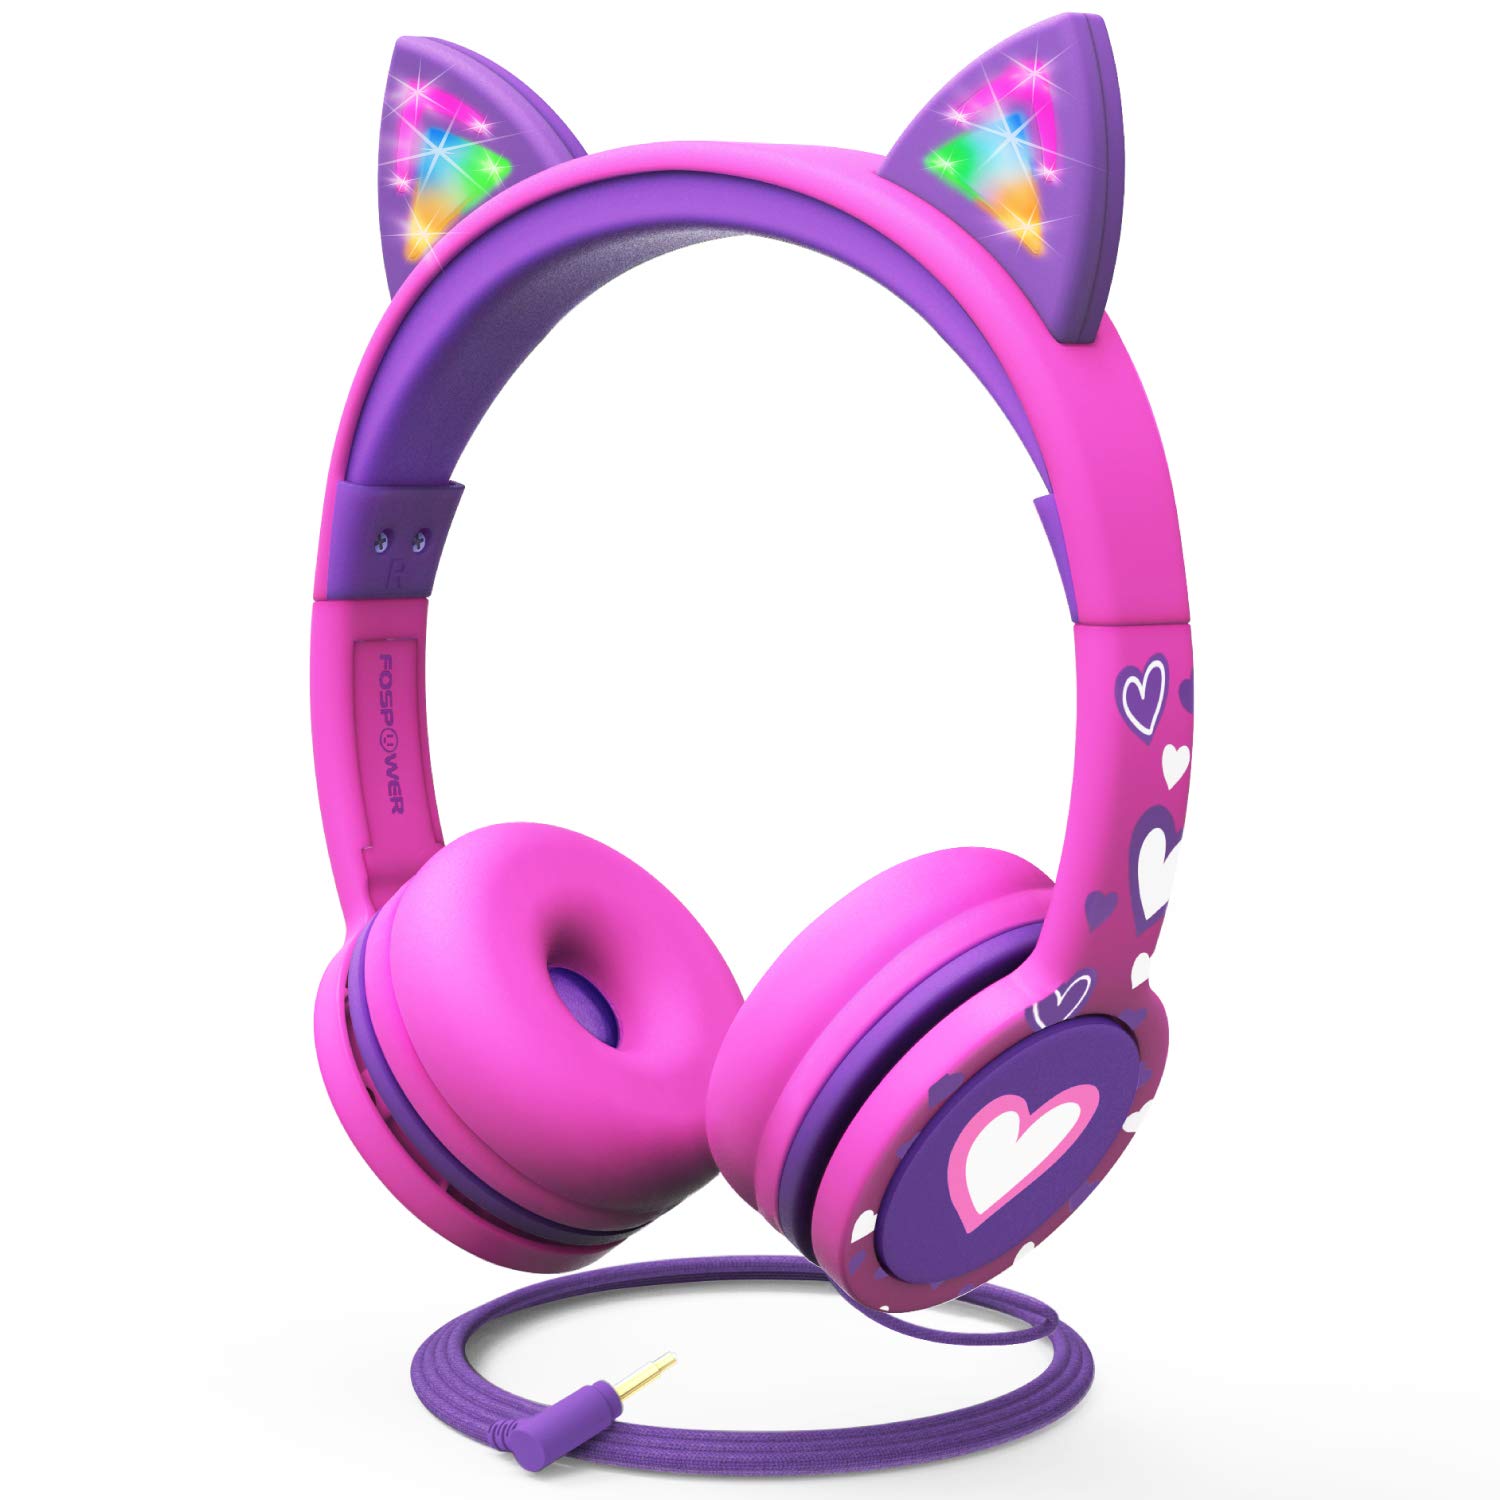 FosPower LED 조명이 있는 어린이용 헤드폰 고양이 귀 3.5mm 온이어 오디오 헤드폰 - 끈으로 묶인 엉킴 방지 케이블(최대 85dB) - 핫 핑크/퍼플